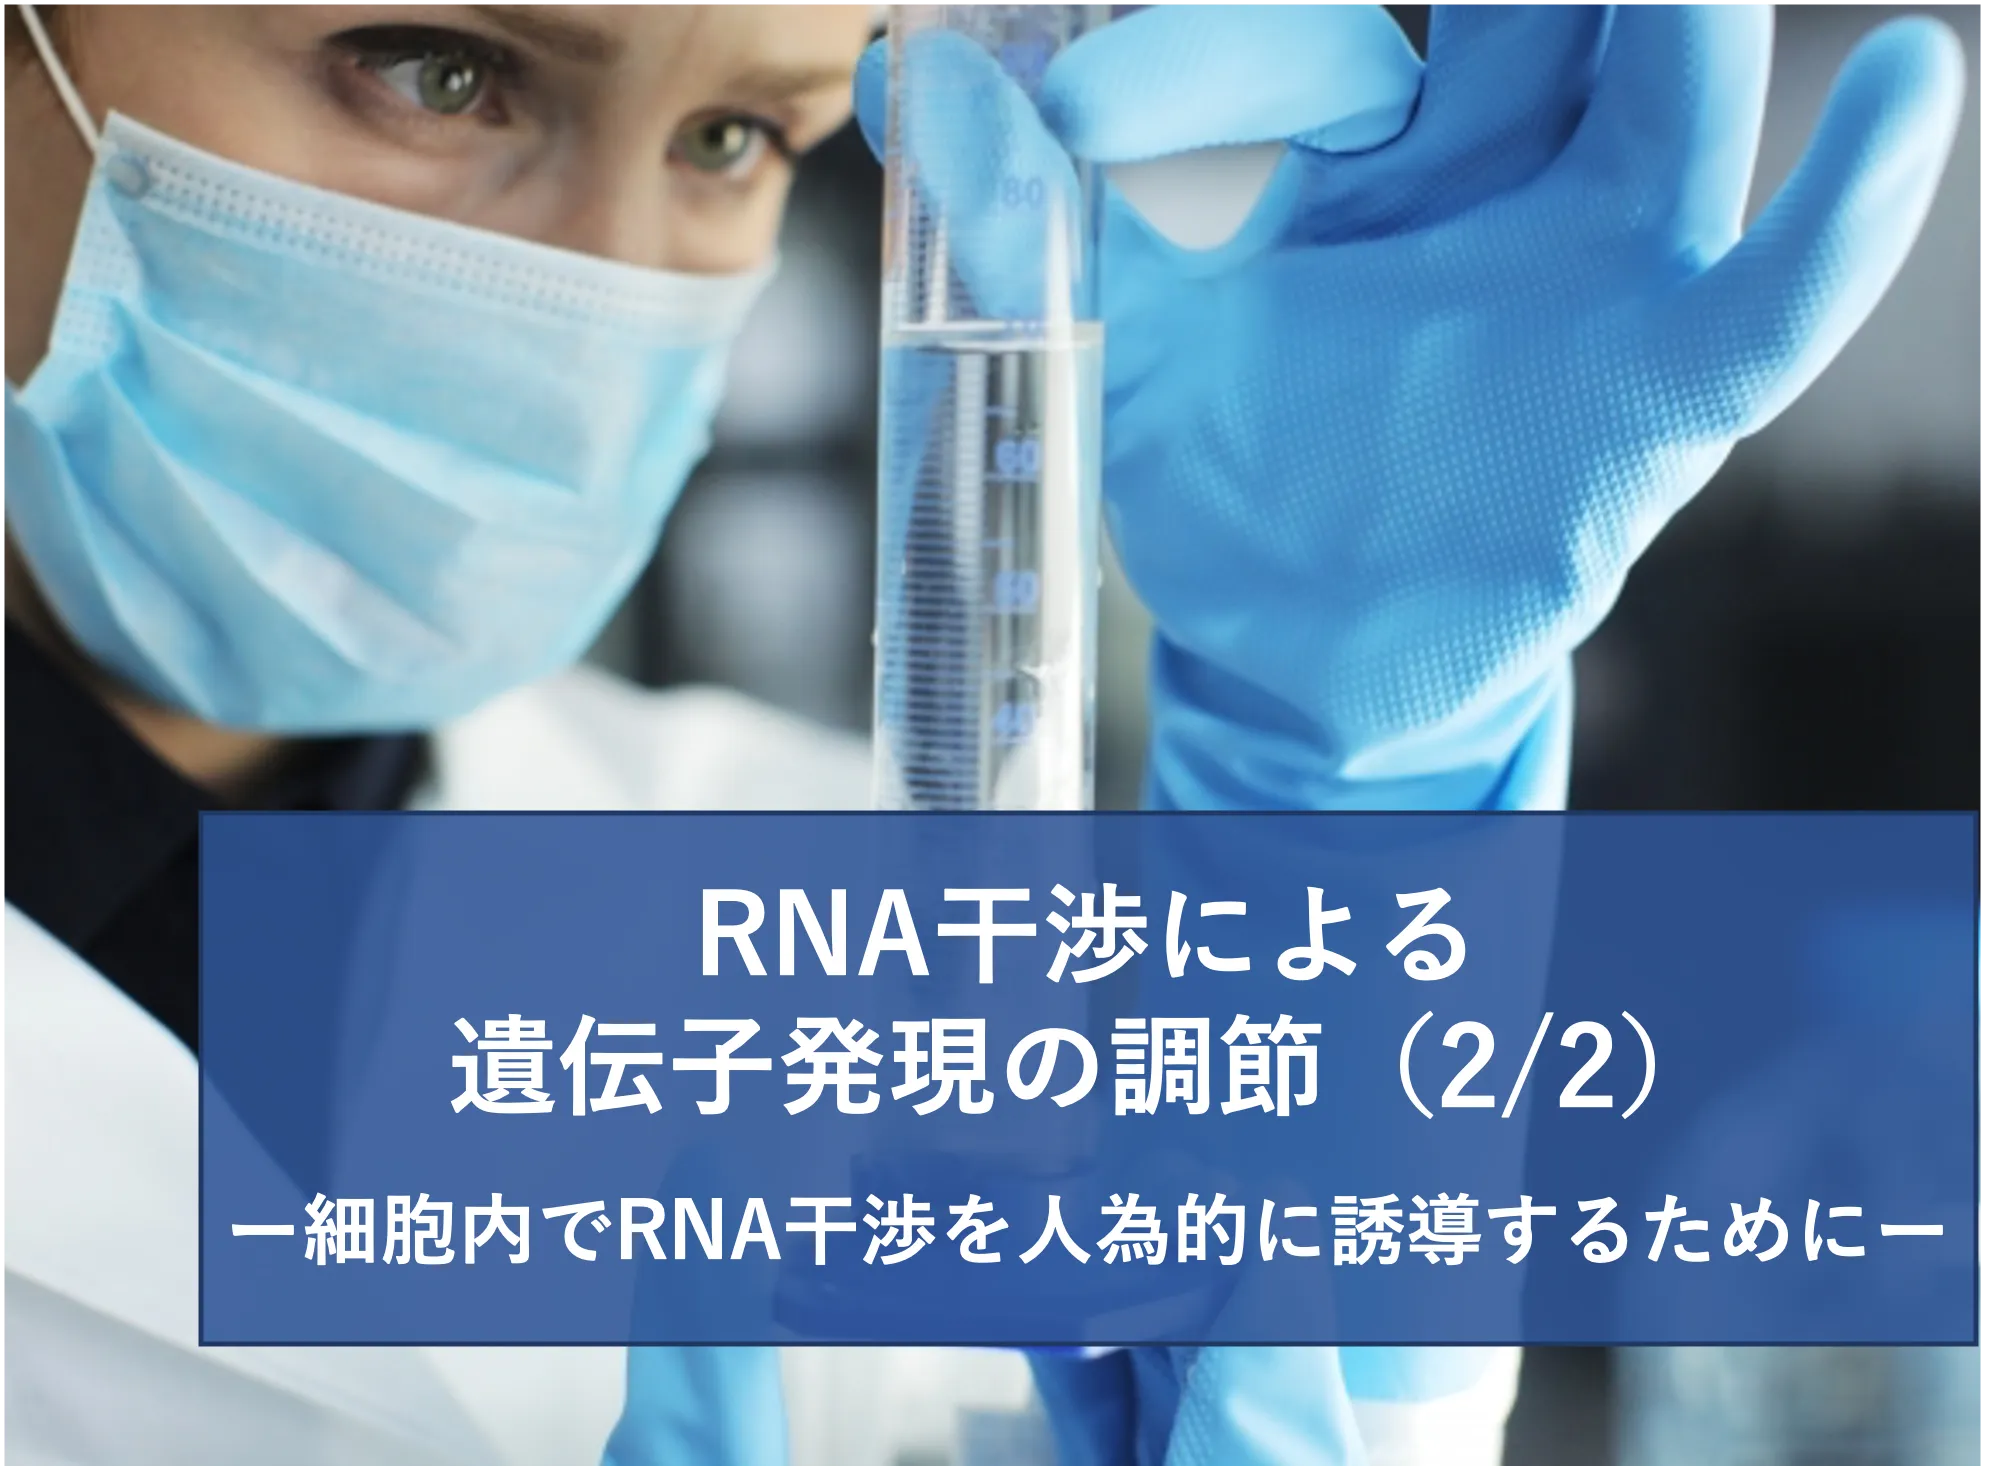 RNA干渉による遺伝子発現の調節（2/2）細胞内でRNA干渉を人為的に誘導するために | リケラボ